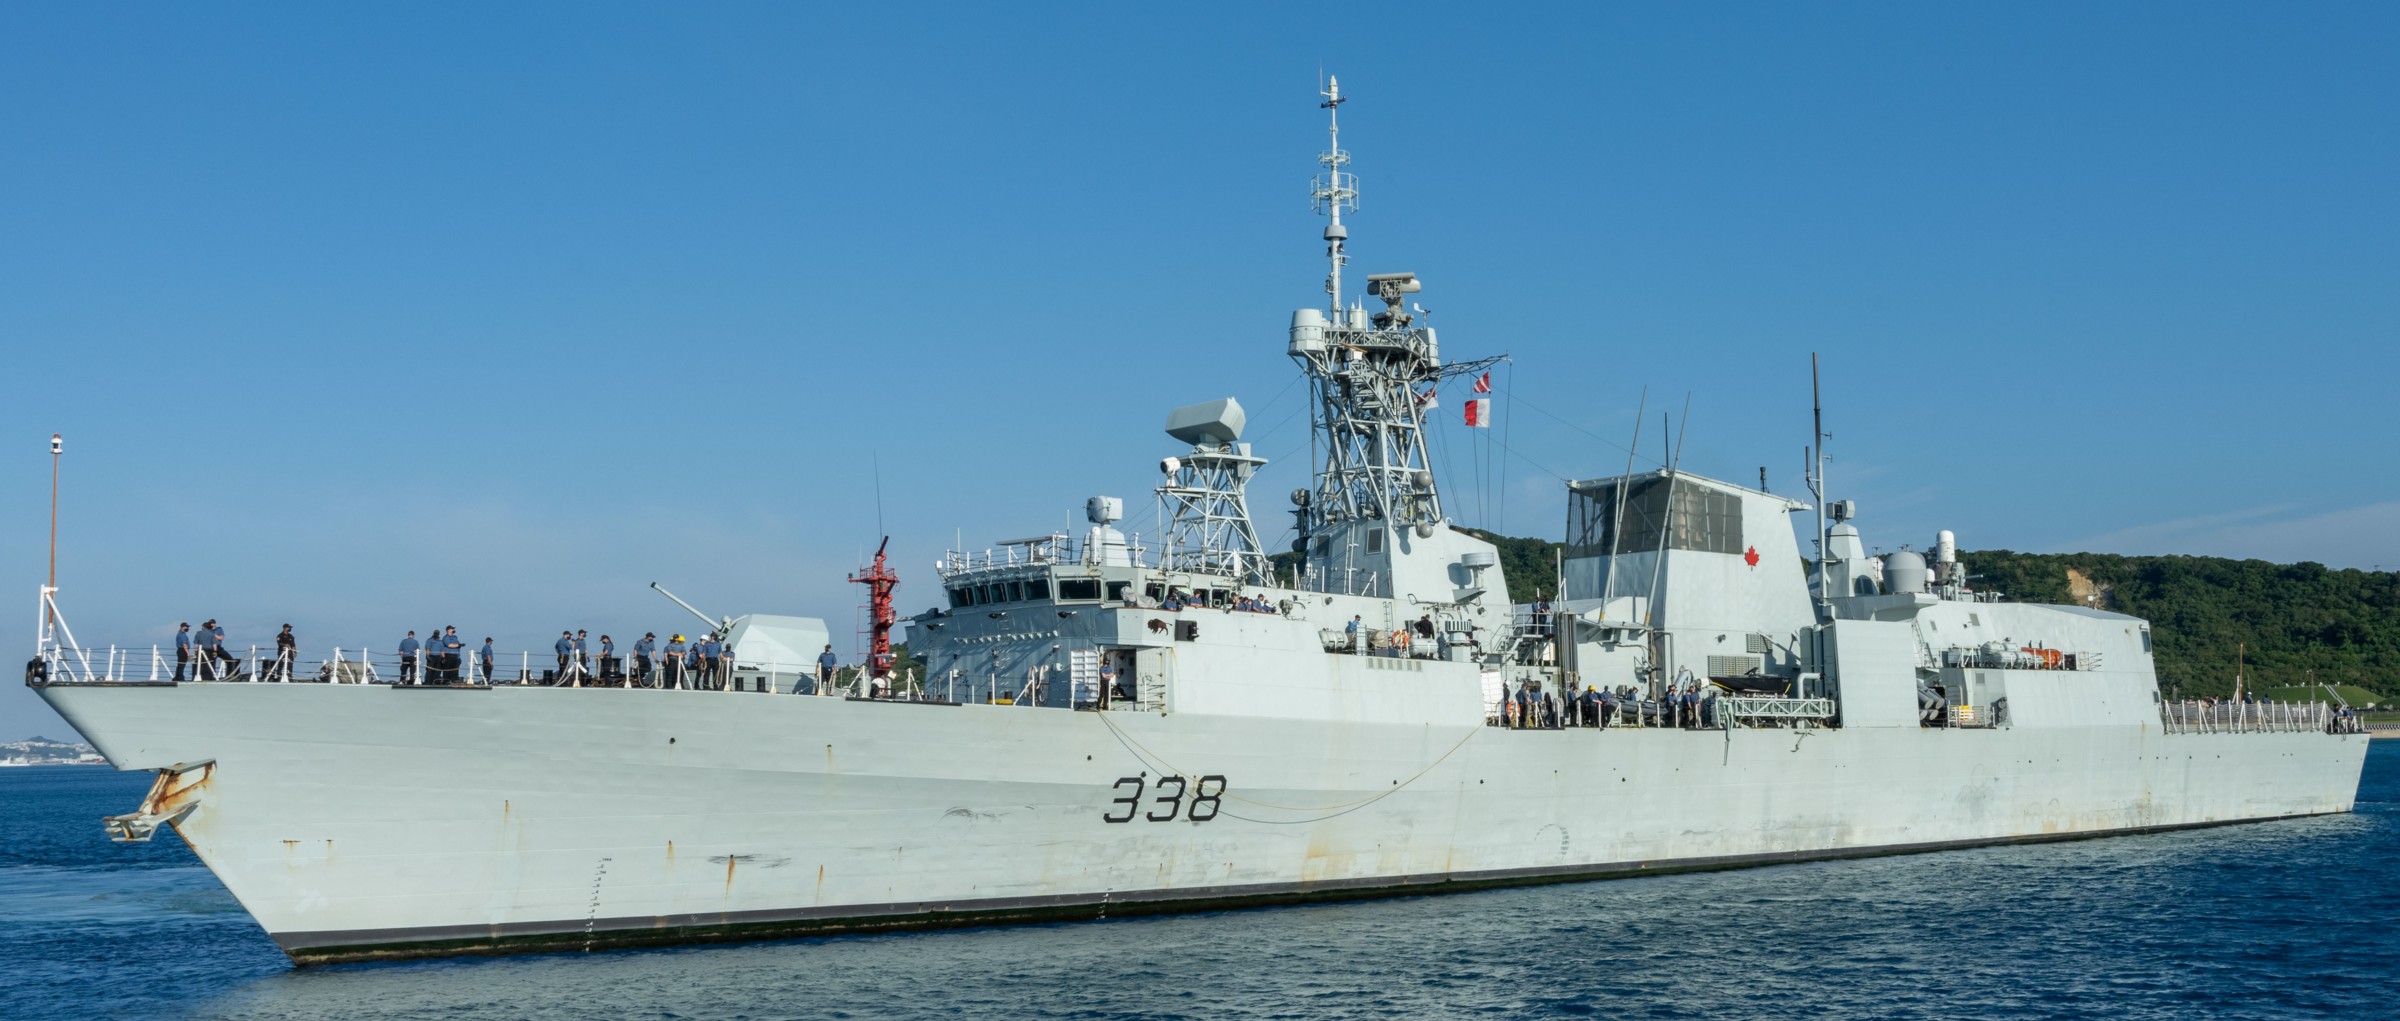 ffh-338 hmcs winnipeg halifax class helicopter patrol frigate ncsm royal canadian navy 29